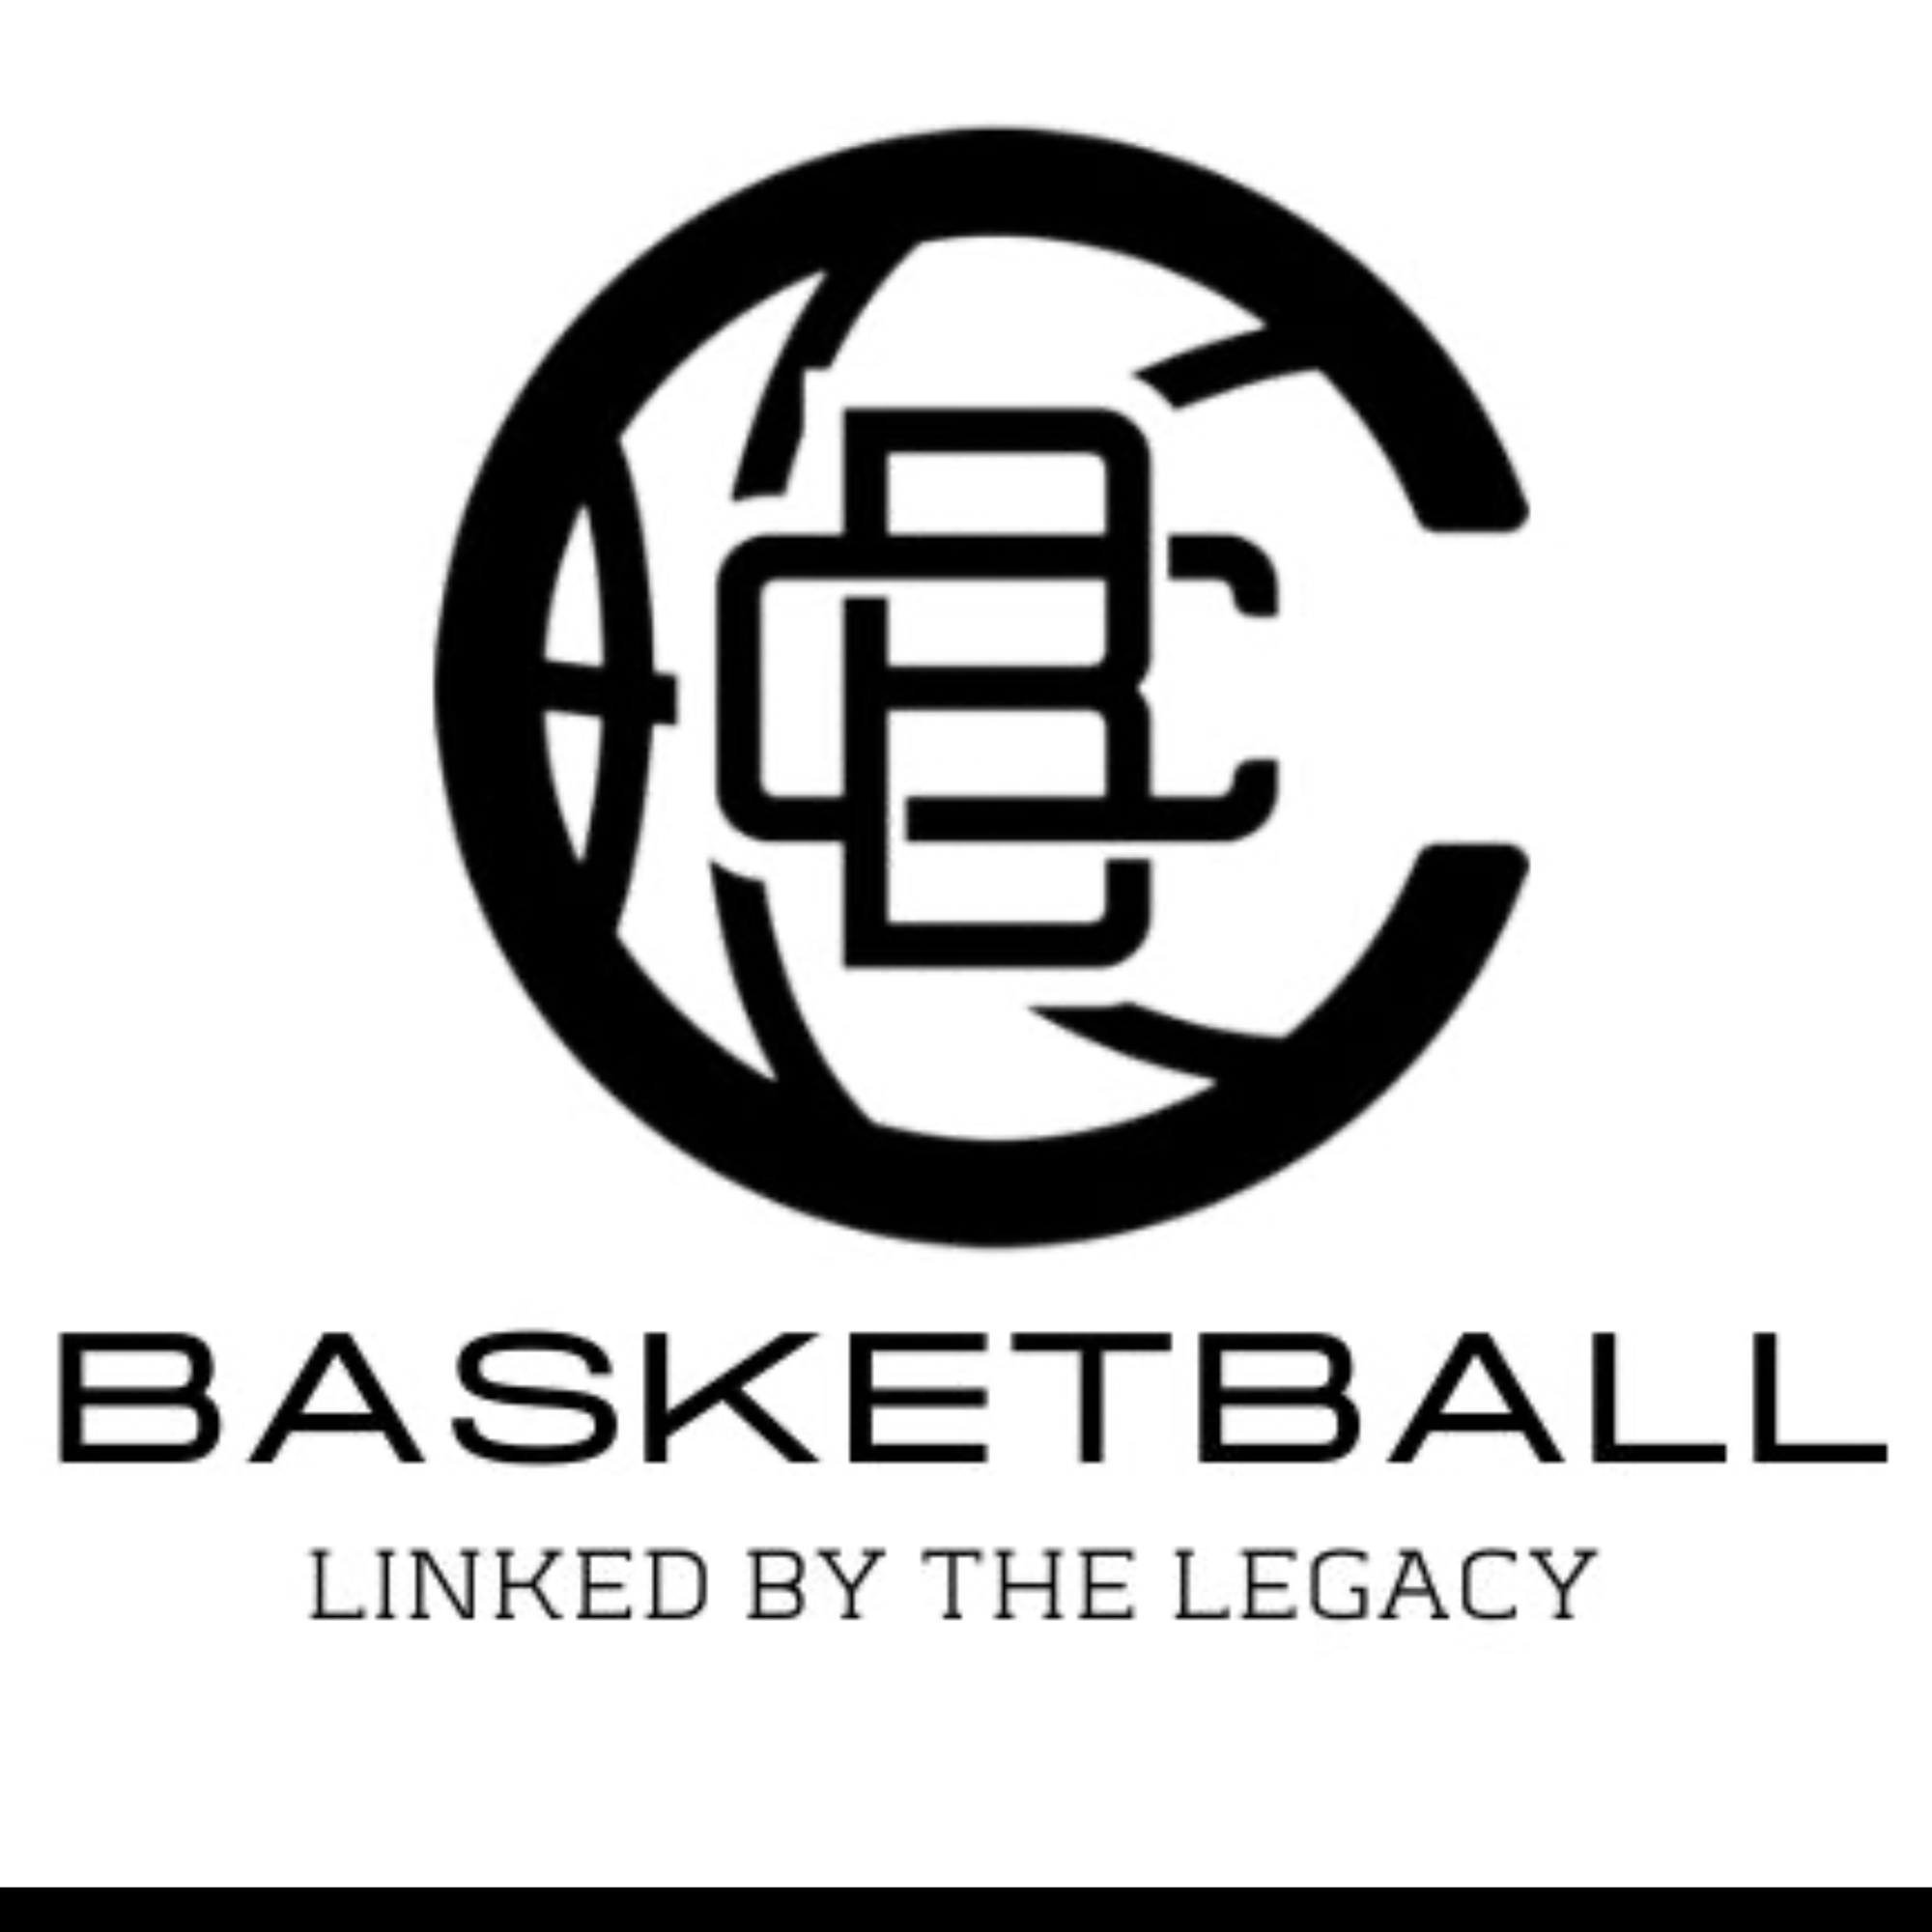 The official logo of California Basketball Club